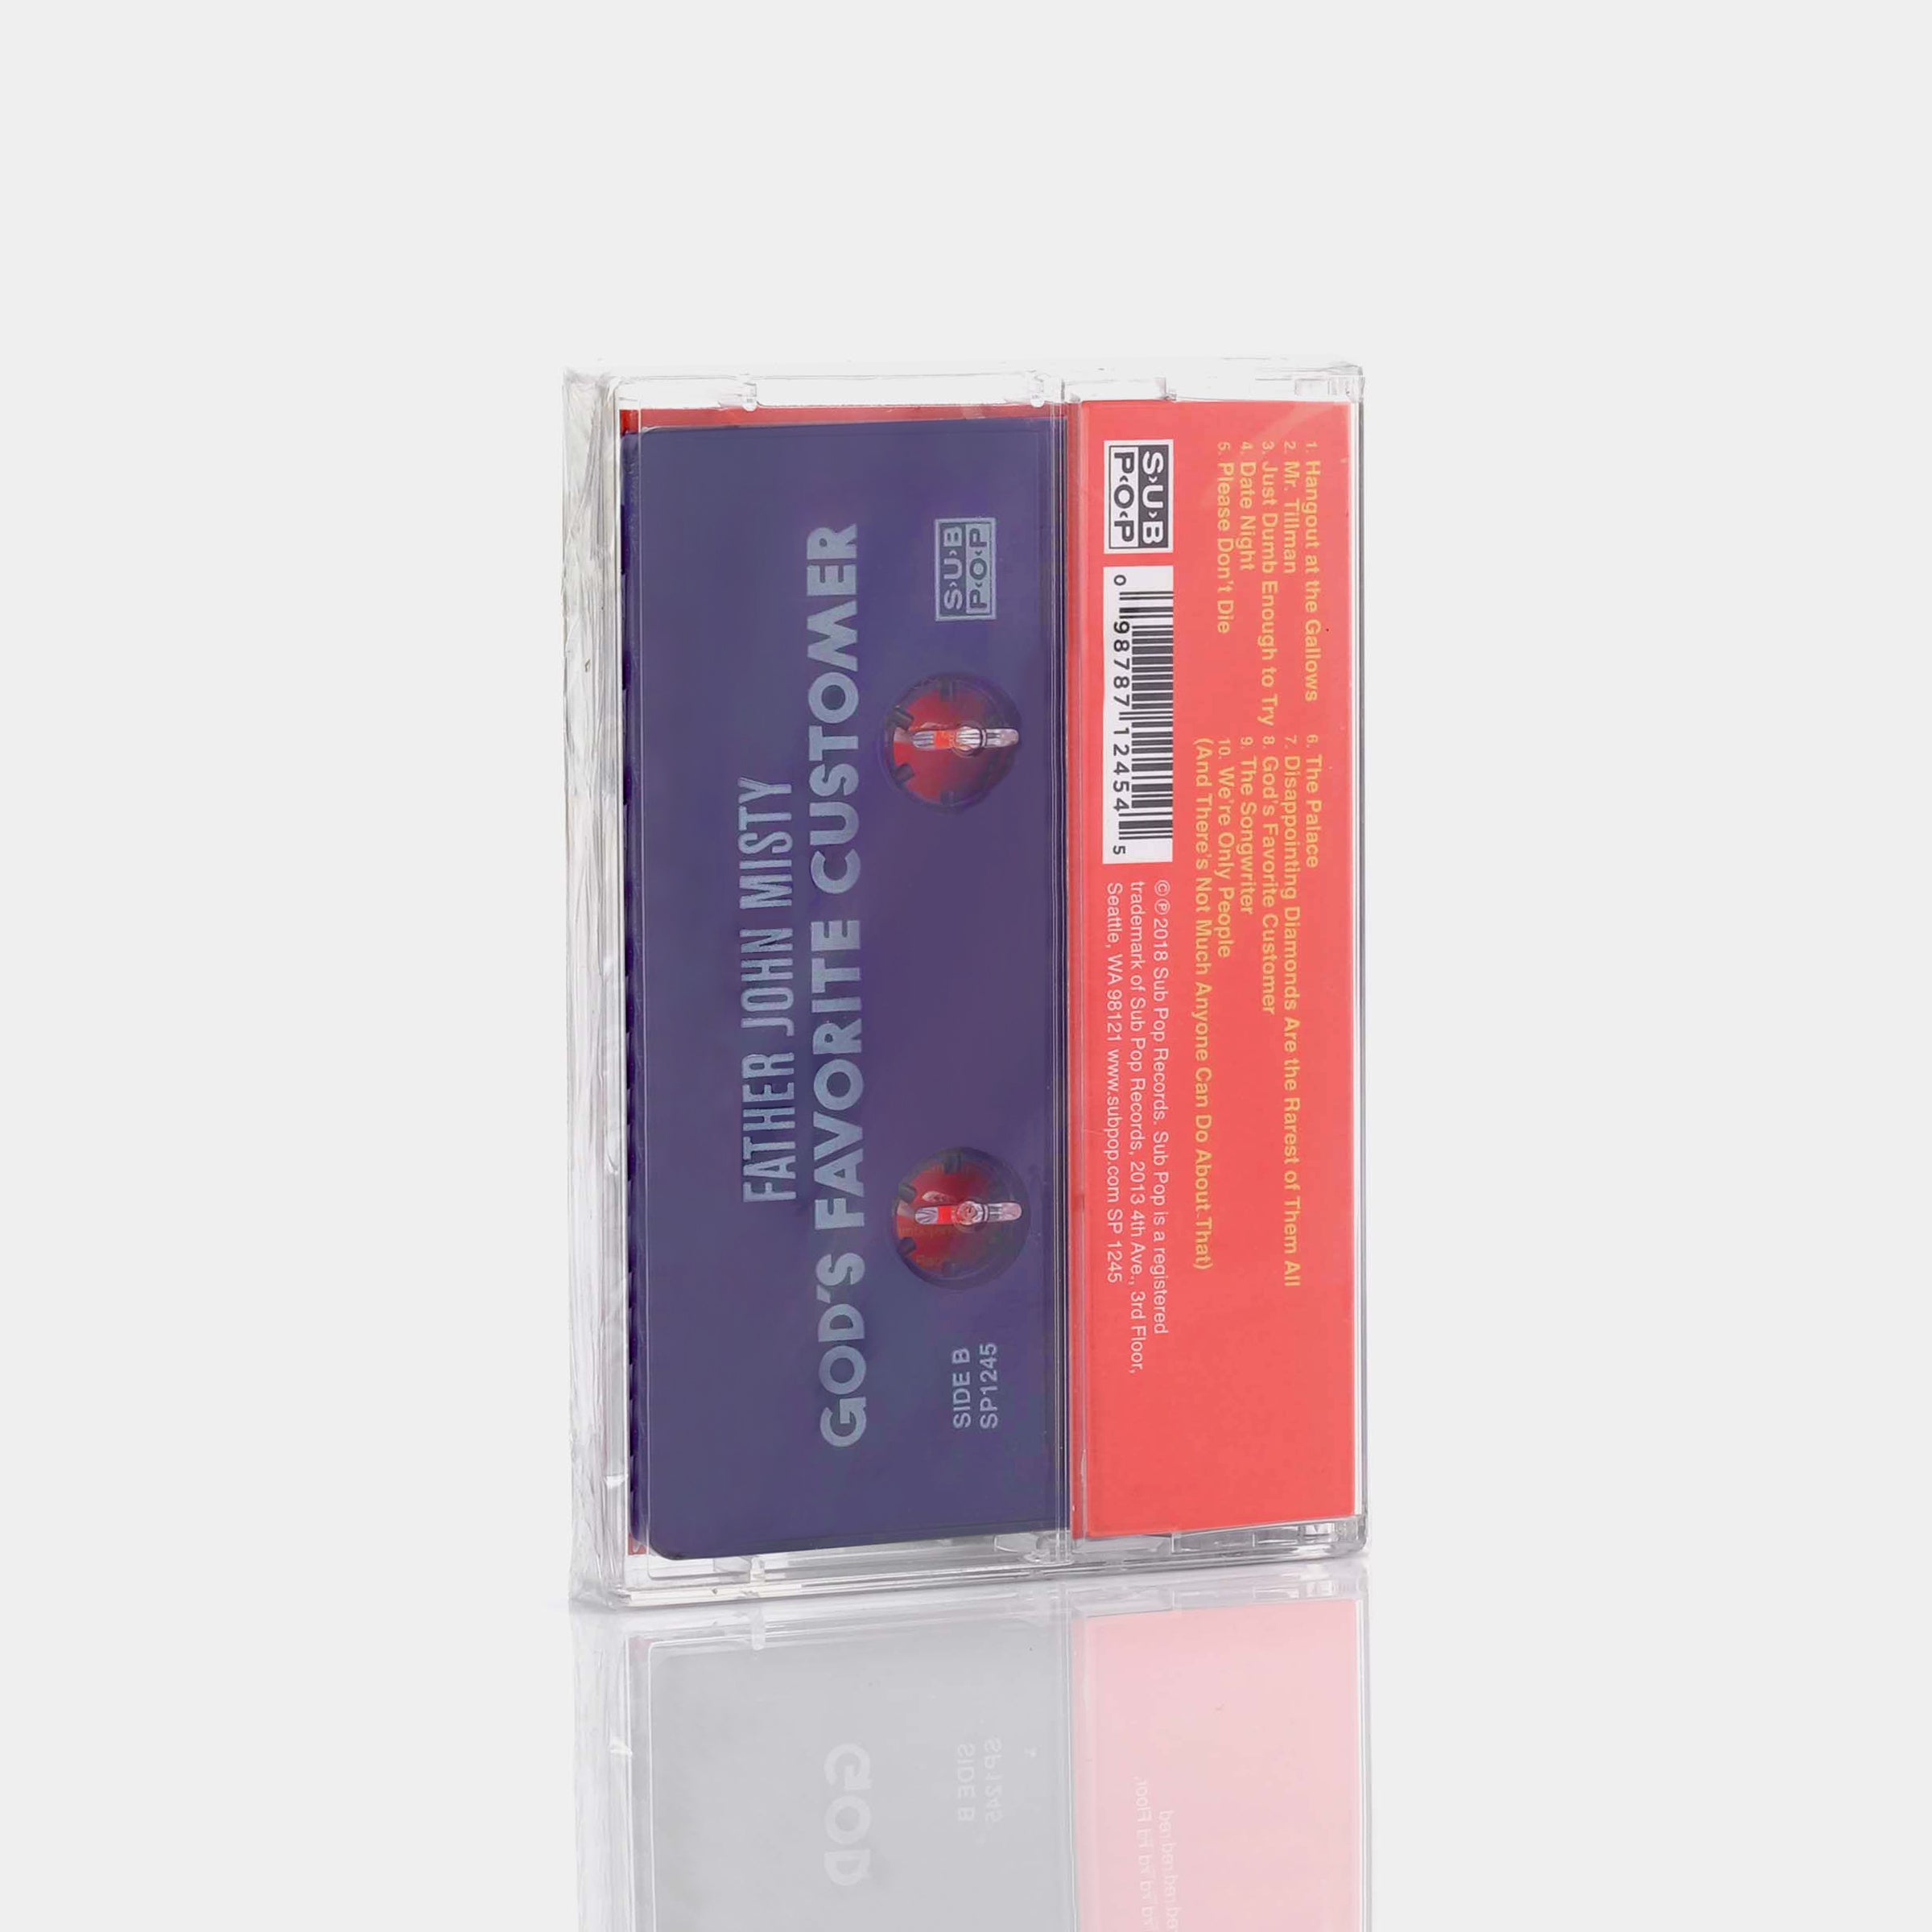 Father John Misty - God's Favorite Customer Cassette Tape